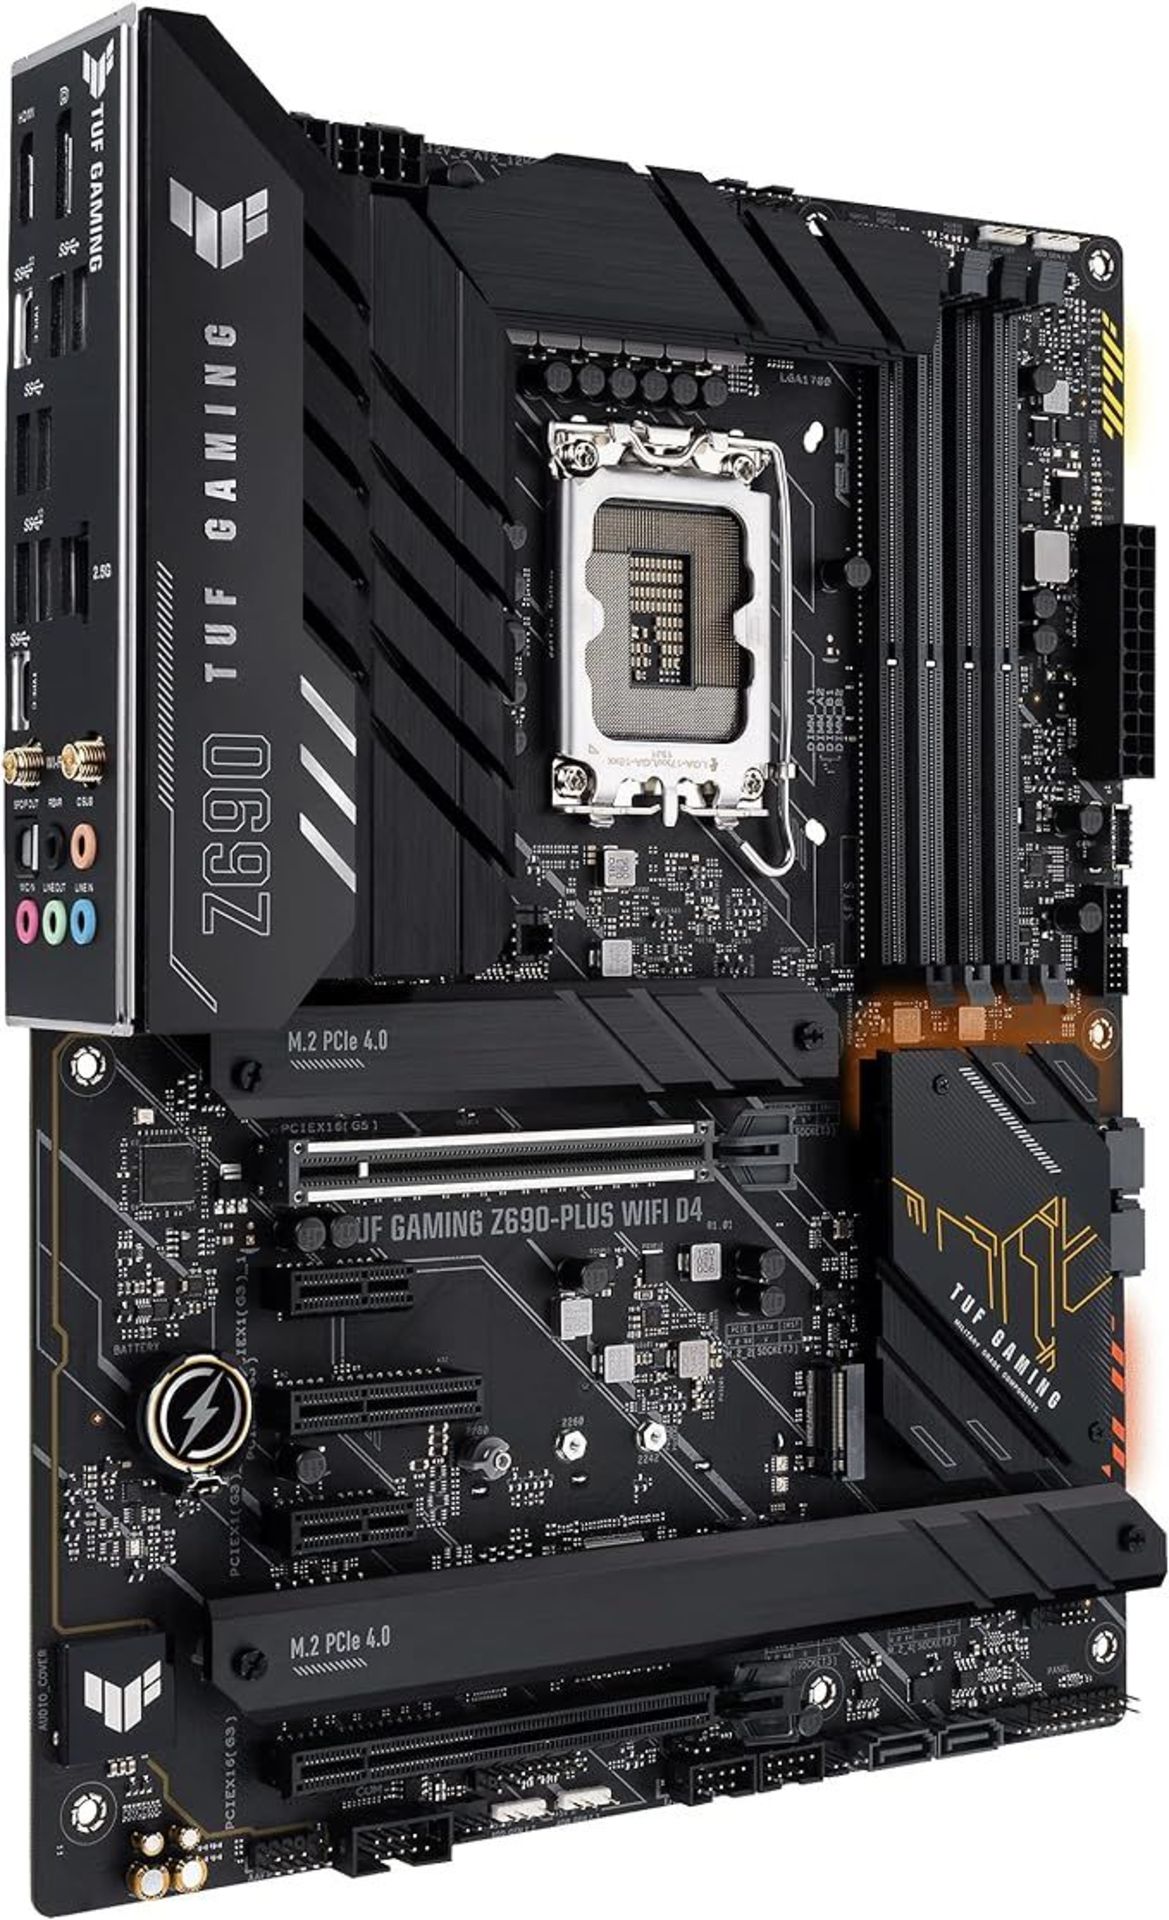 ASUS TUF Gaming Z690-PLUS WIFI D4 LGA 1700 ATX Motherboard - P7. RRP £409.00., 15 DrMOS, PCIe 5.0, - Image 2 of 2